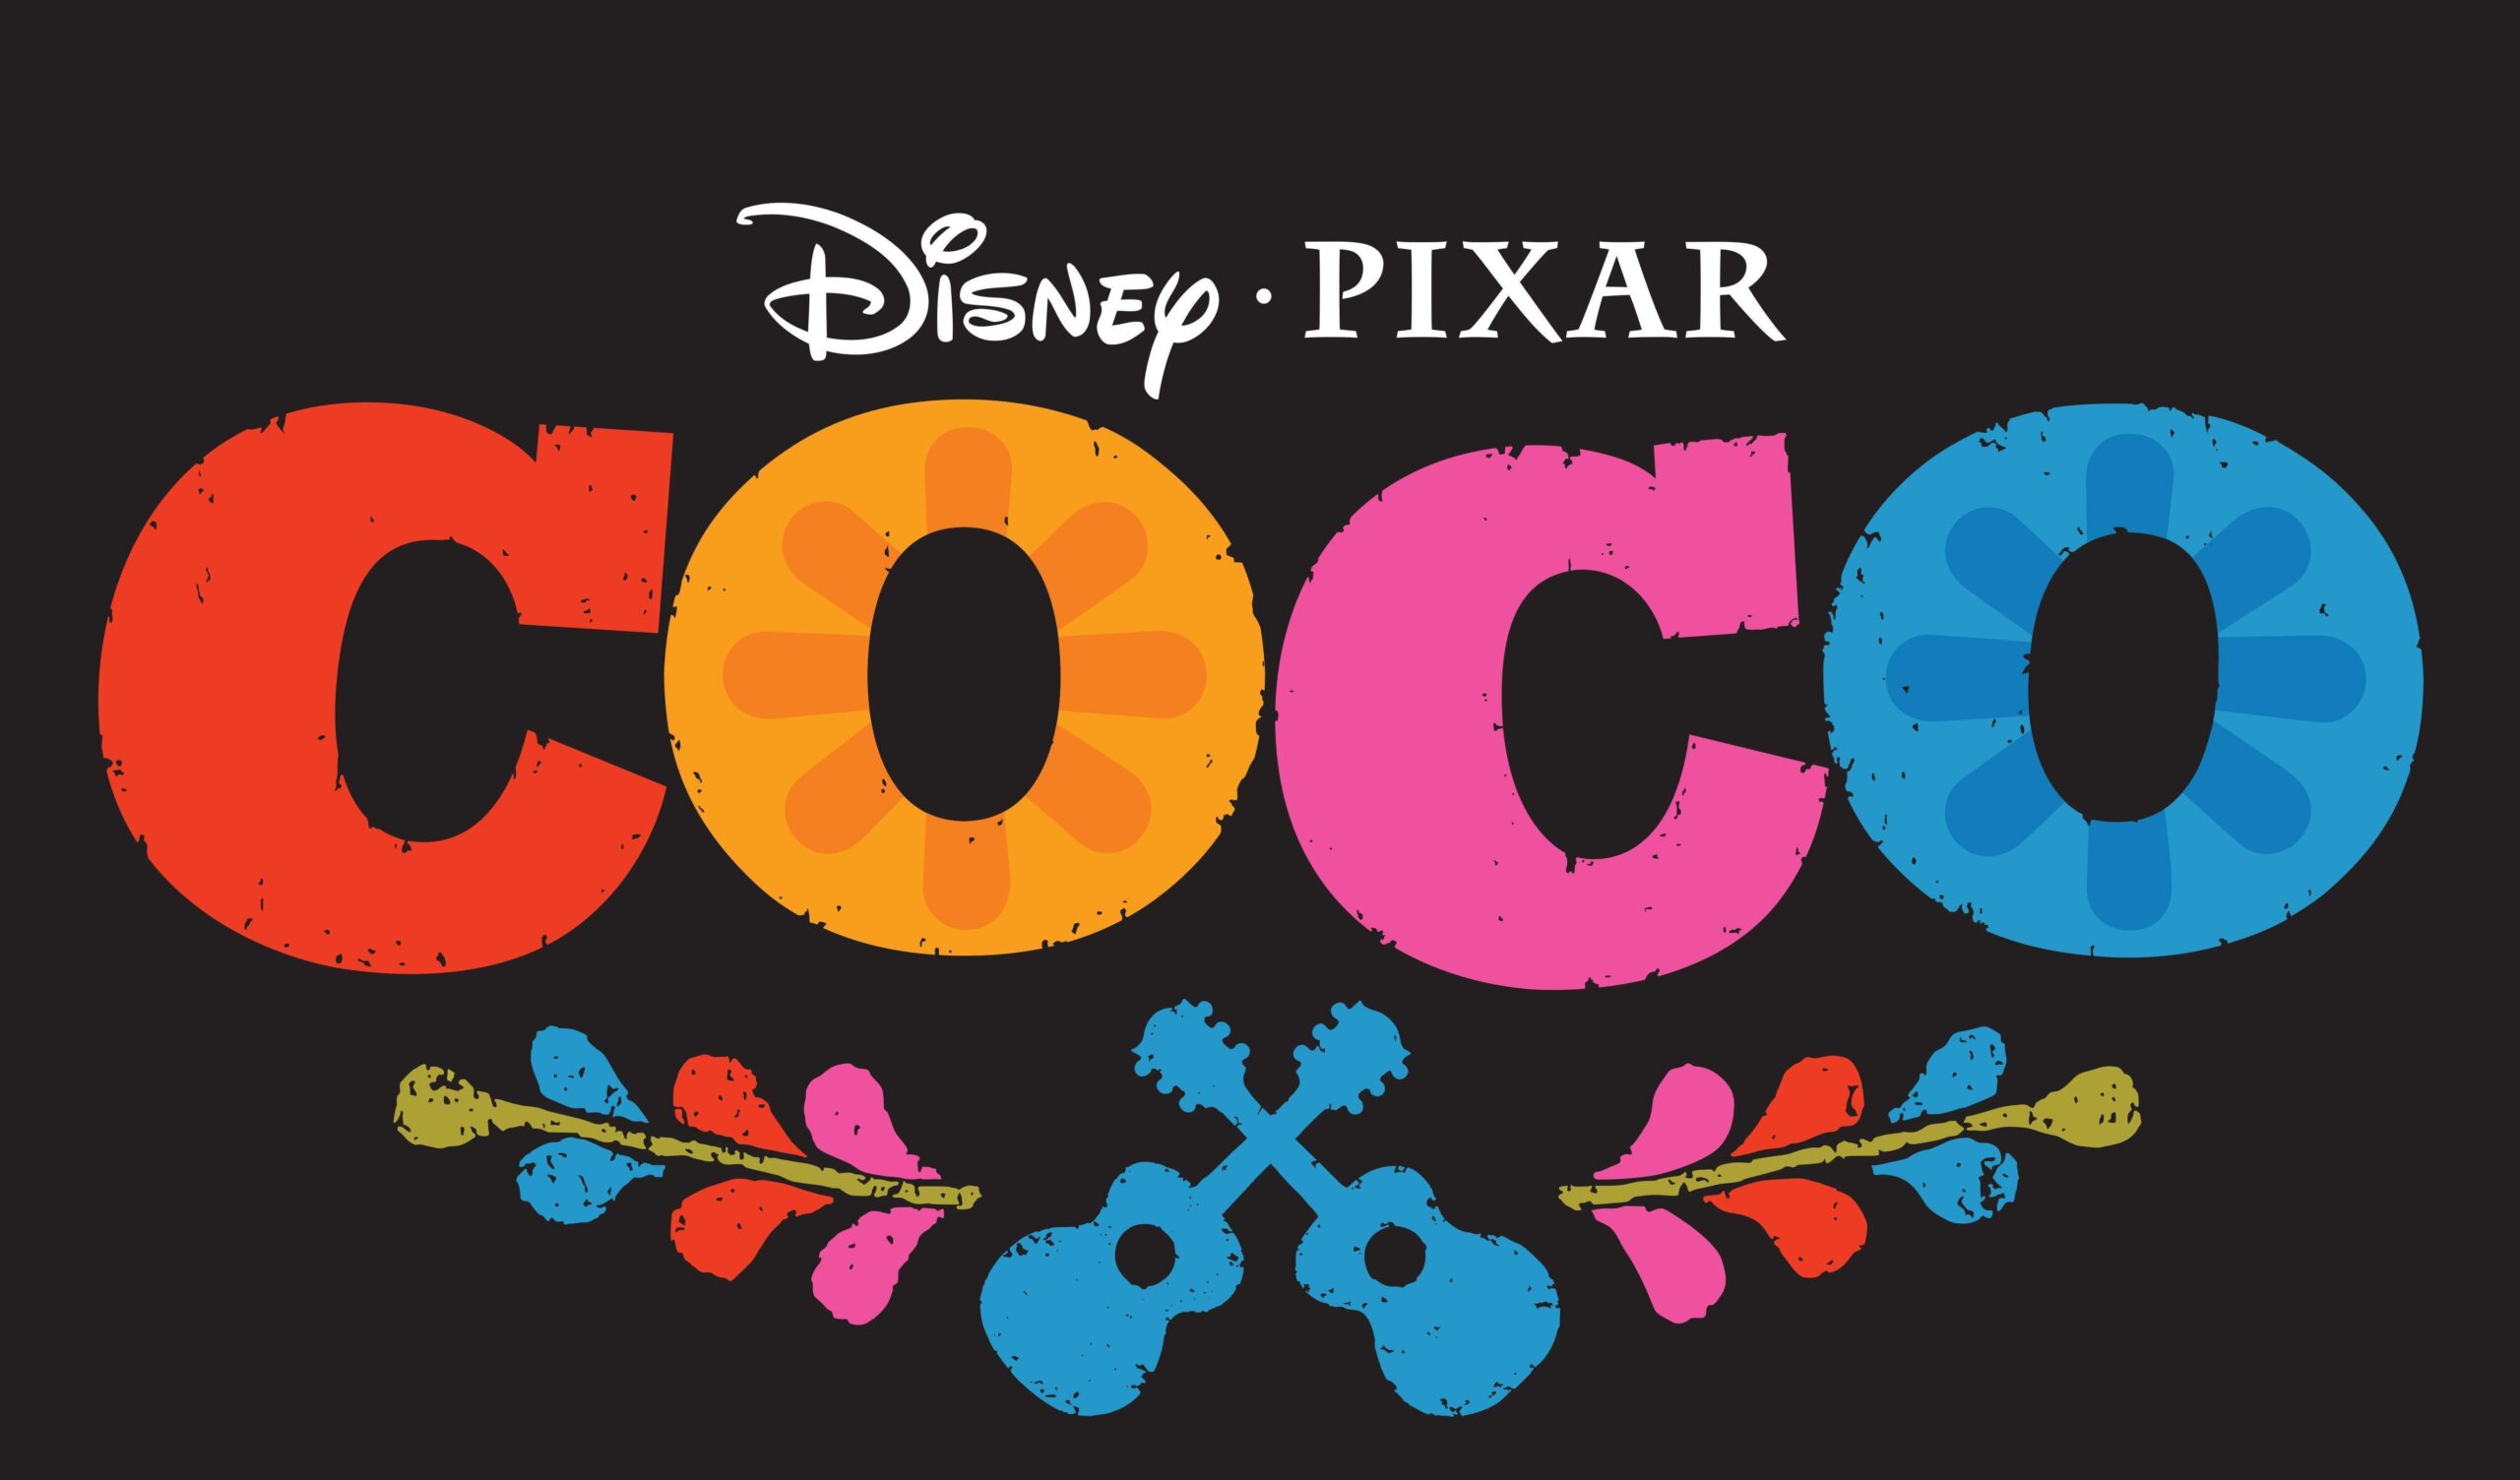 Coco Pixar Free Desktop Wallpaper